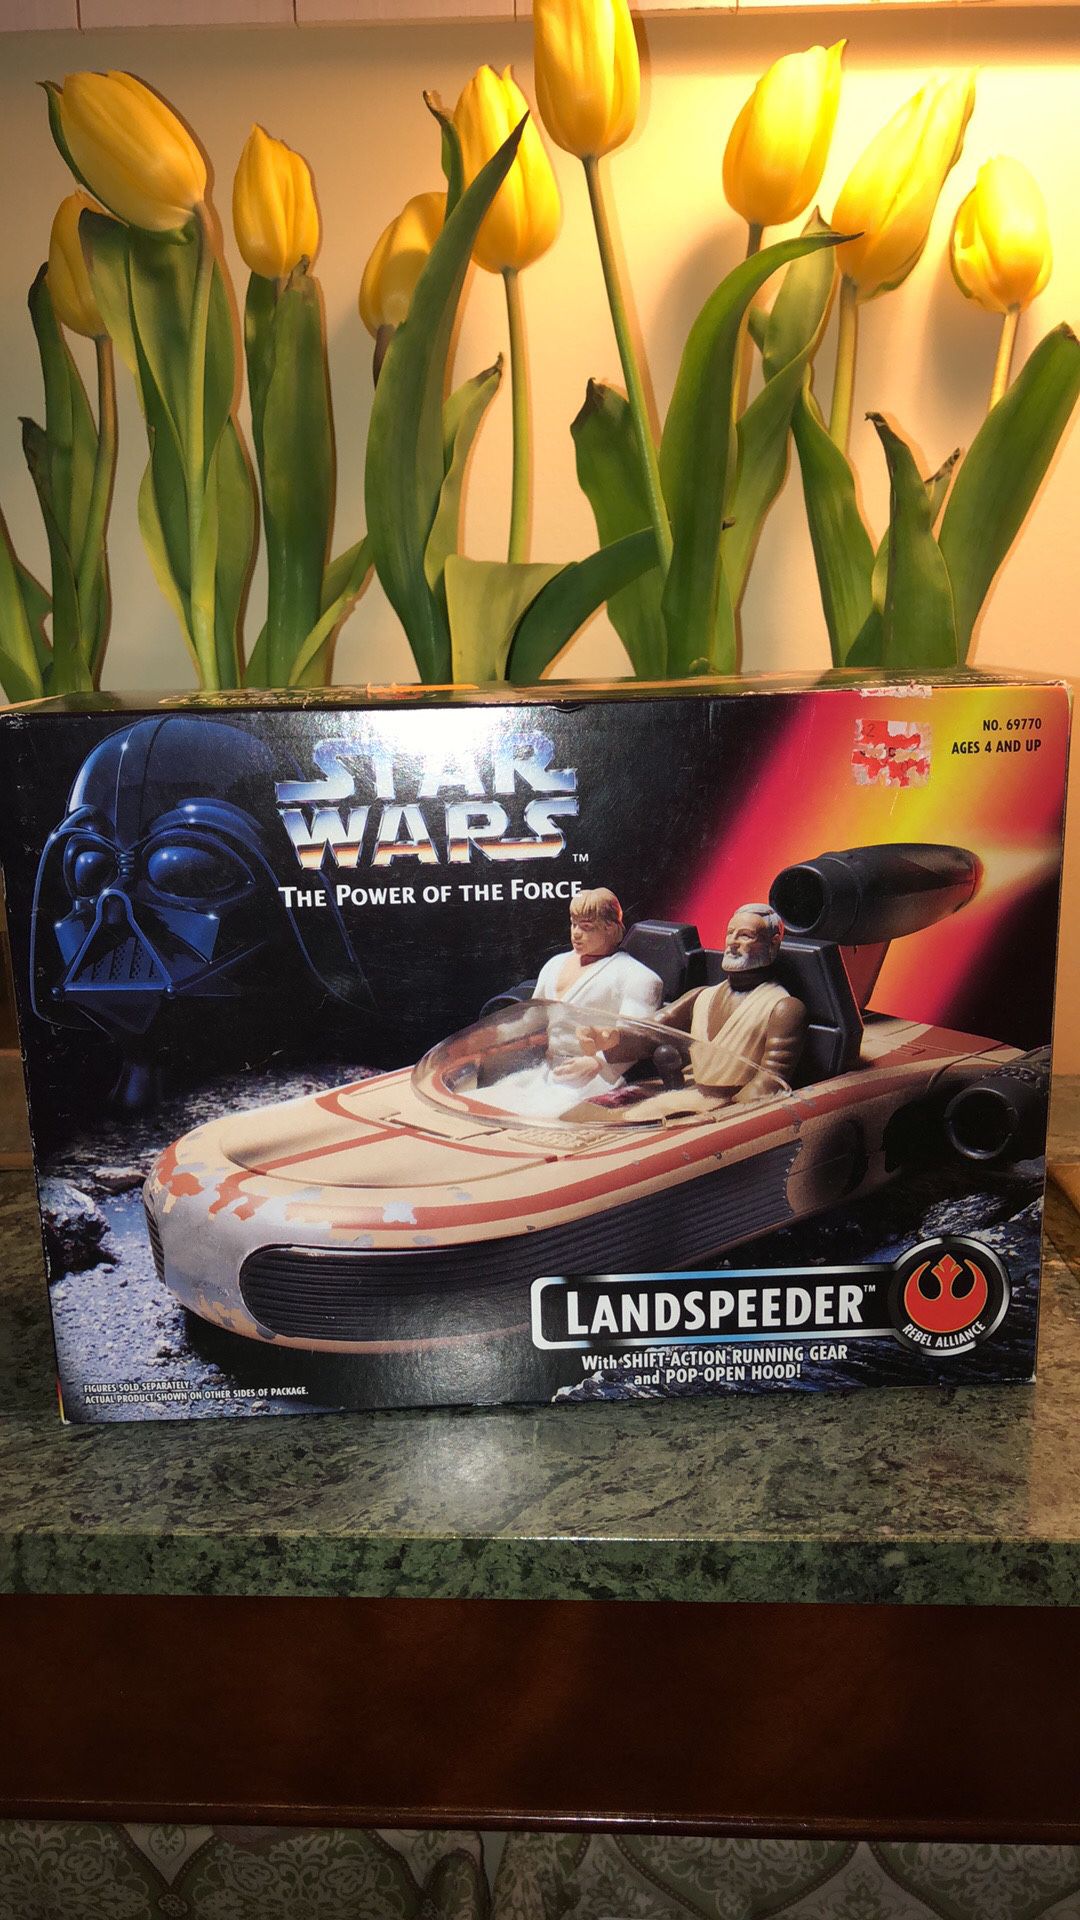 Star Wars “The Power Of The Force” Landspeeder